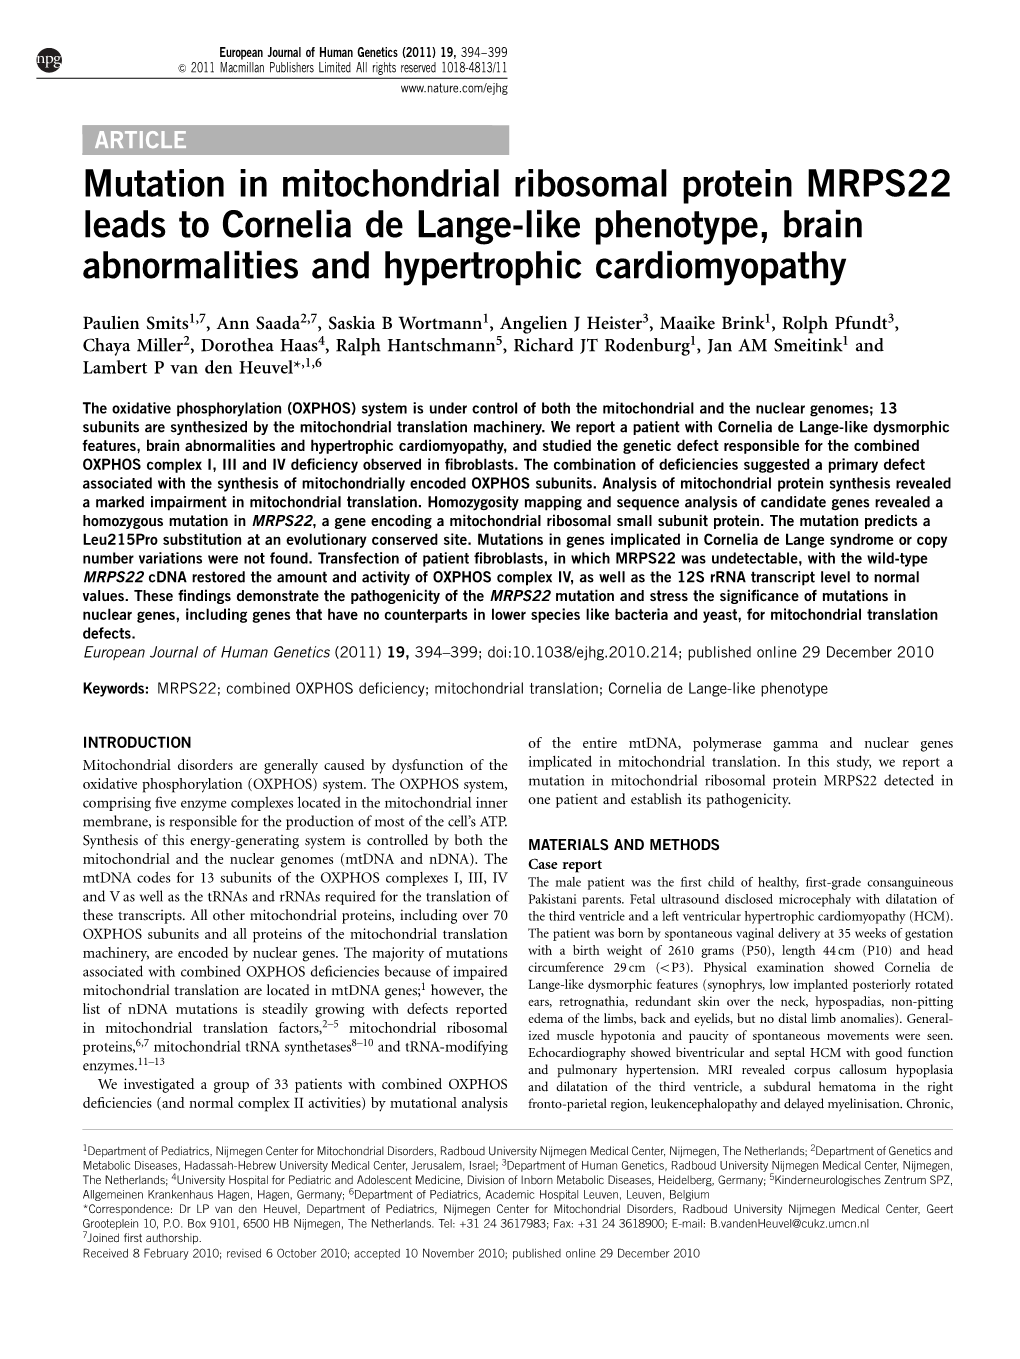 Mutation in Mitochondrial Ribosomal Protein MRPS22 Leads to Cornelia De Lange-Like Phenotype, Brain Abnormalities and Hypertrophic Cardiomyopathy